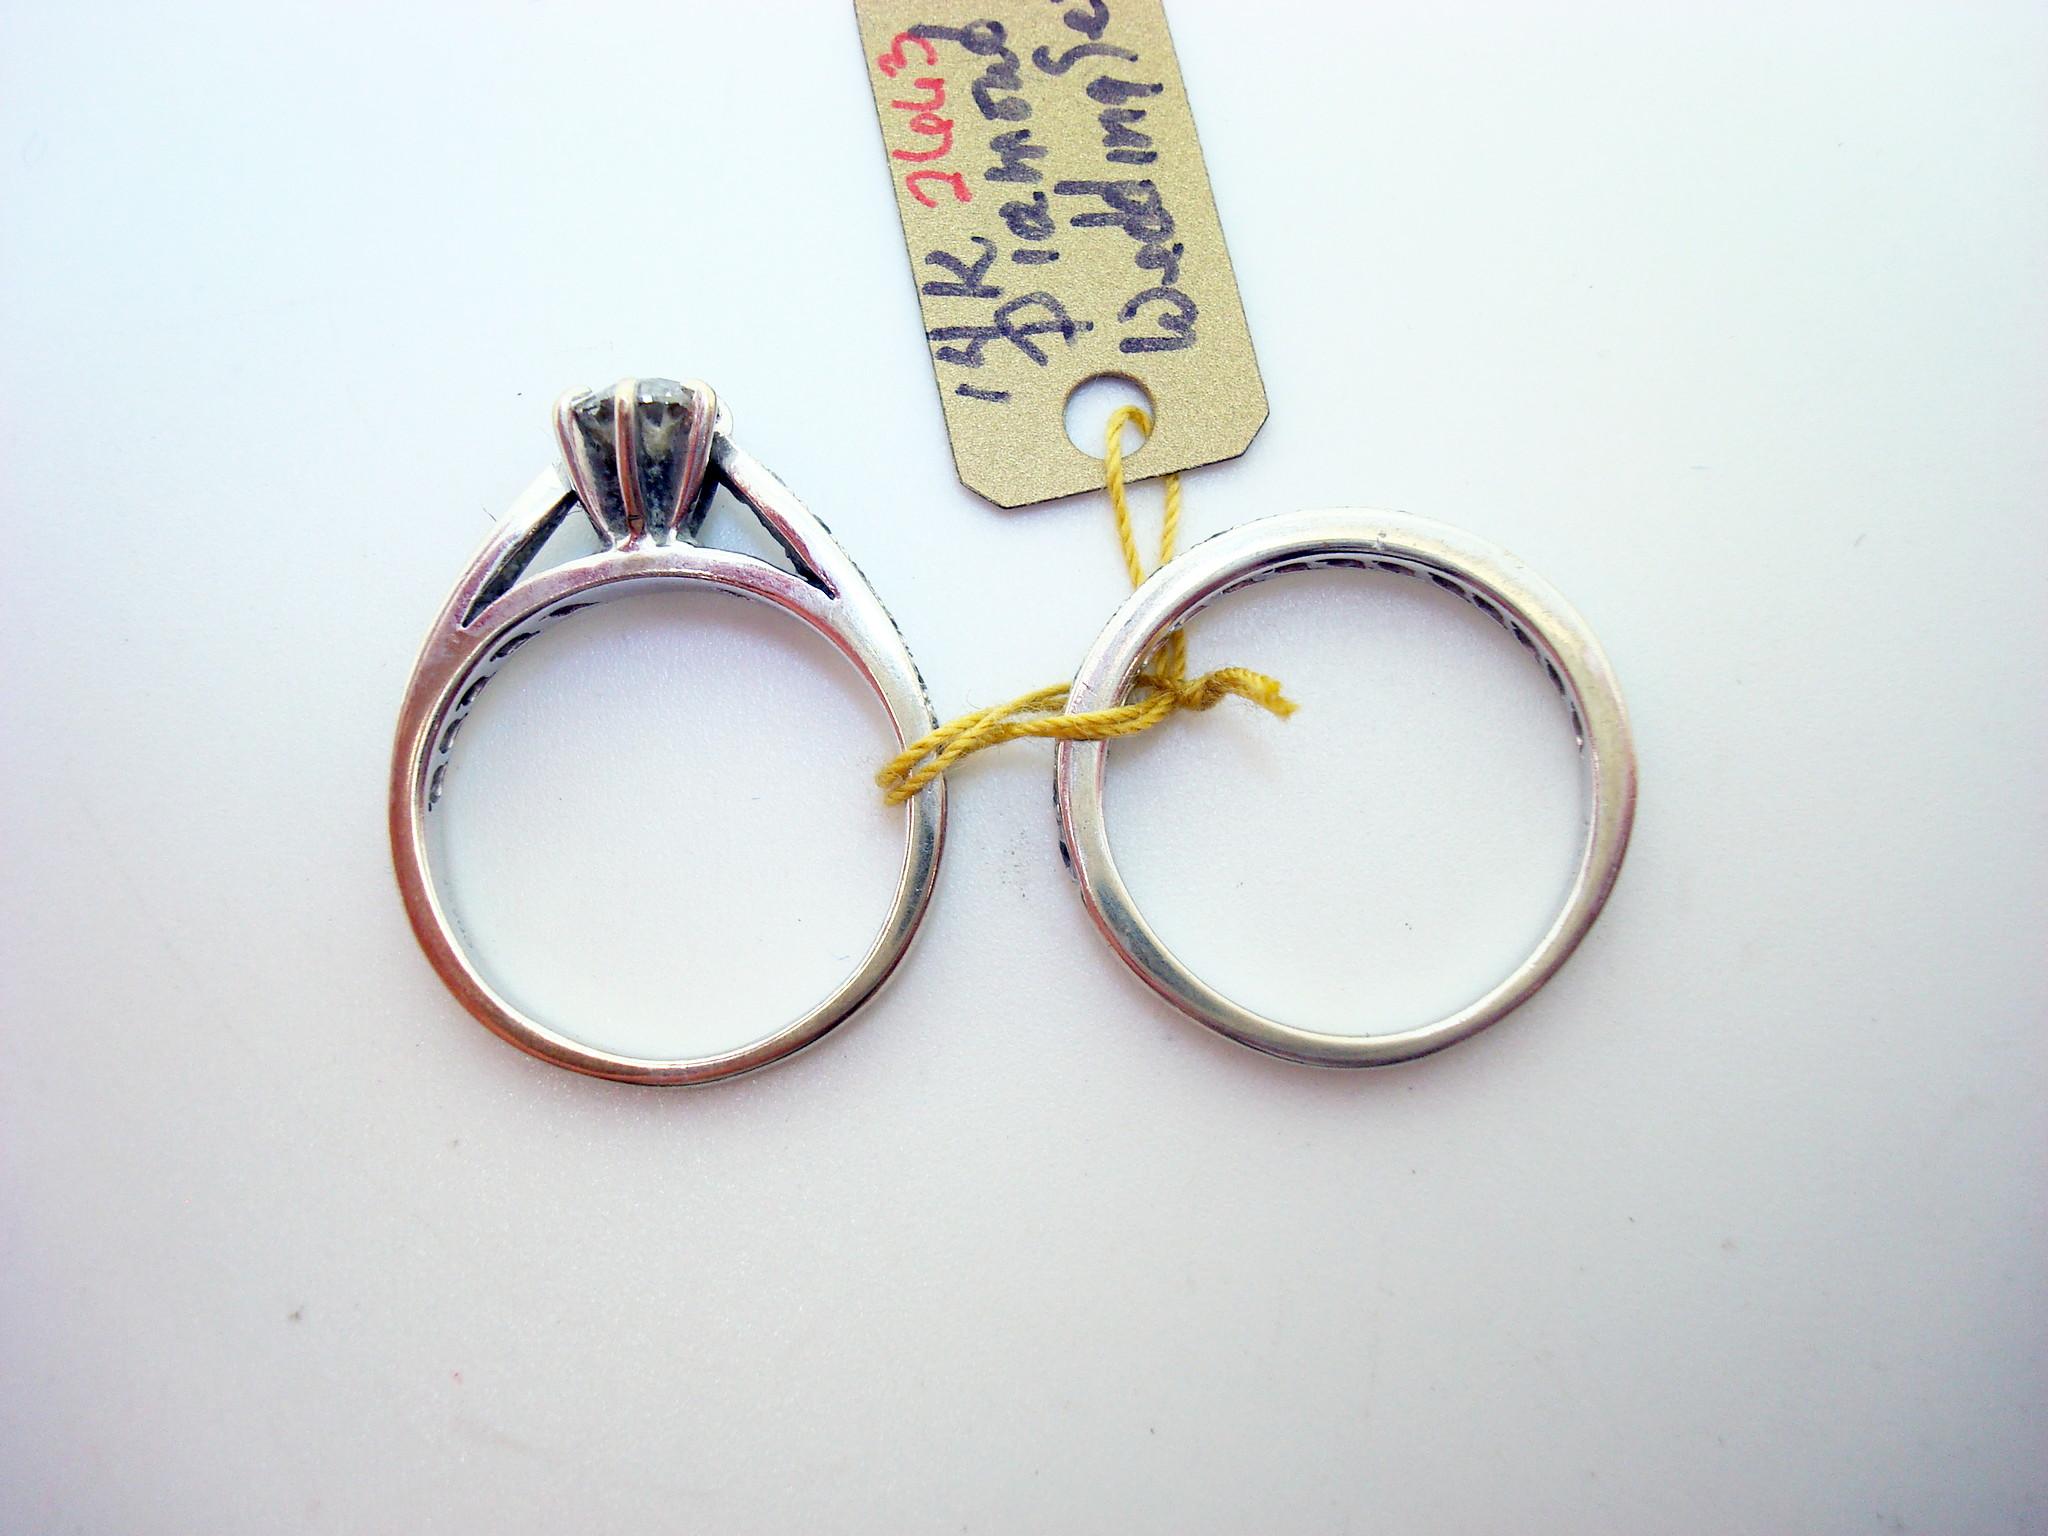 Brilliant Cut 14k White Gold Genuine Natural Diamond Engagement Wedding Ring Set 1ct '#J2663' For Sale